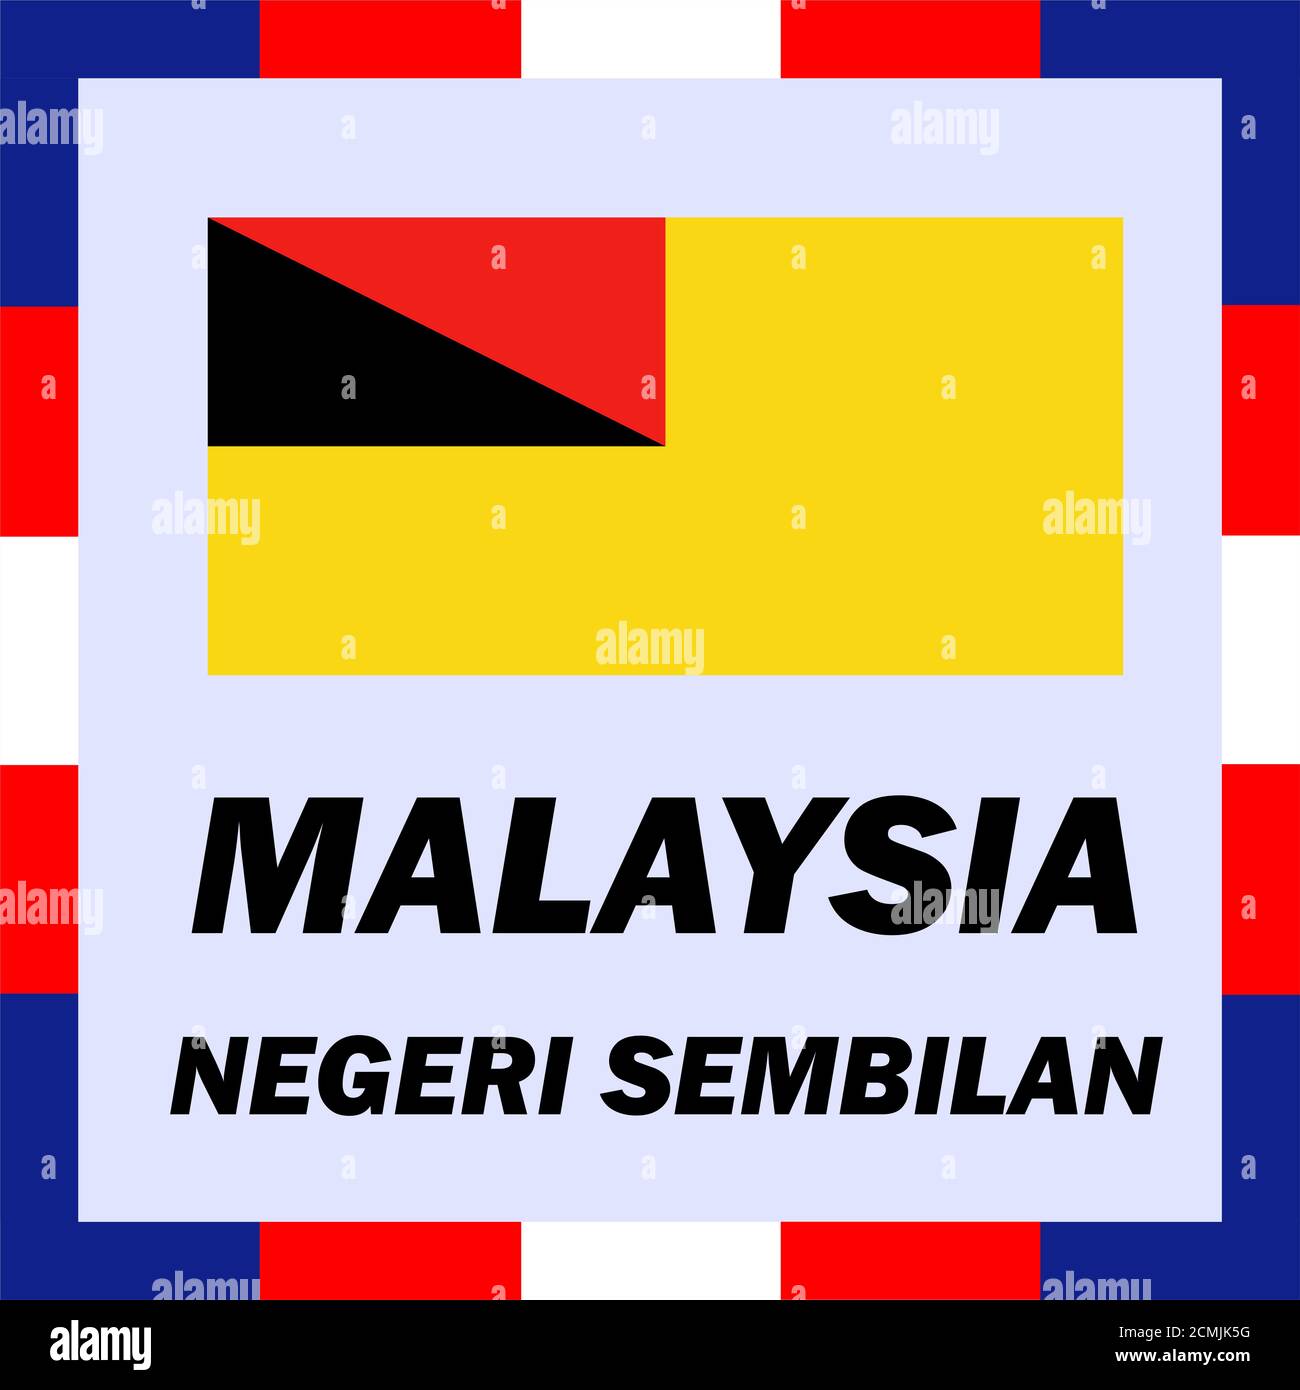 Offizielle Flaggen, Fahne und Wappen Arm von Malaysia - Negeri Sembilan Stockfoto